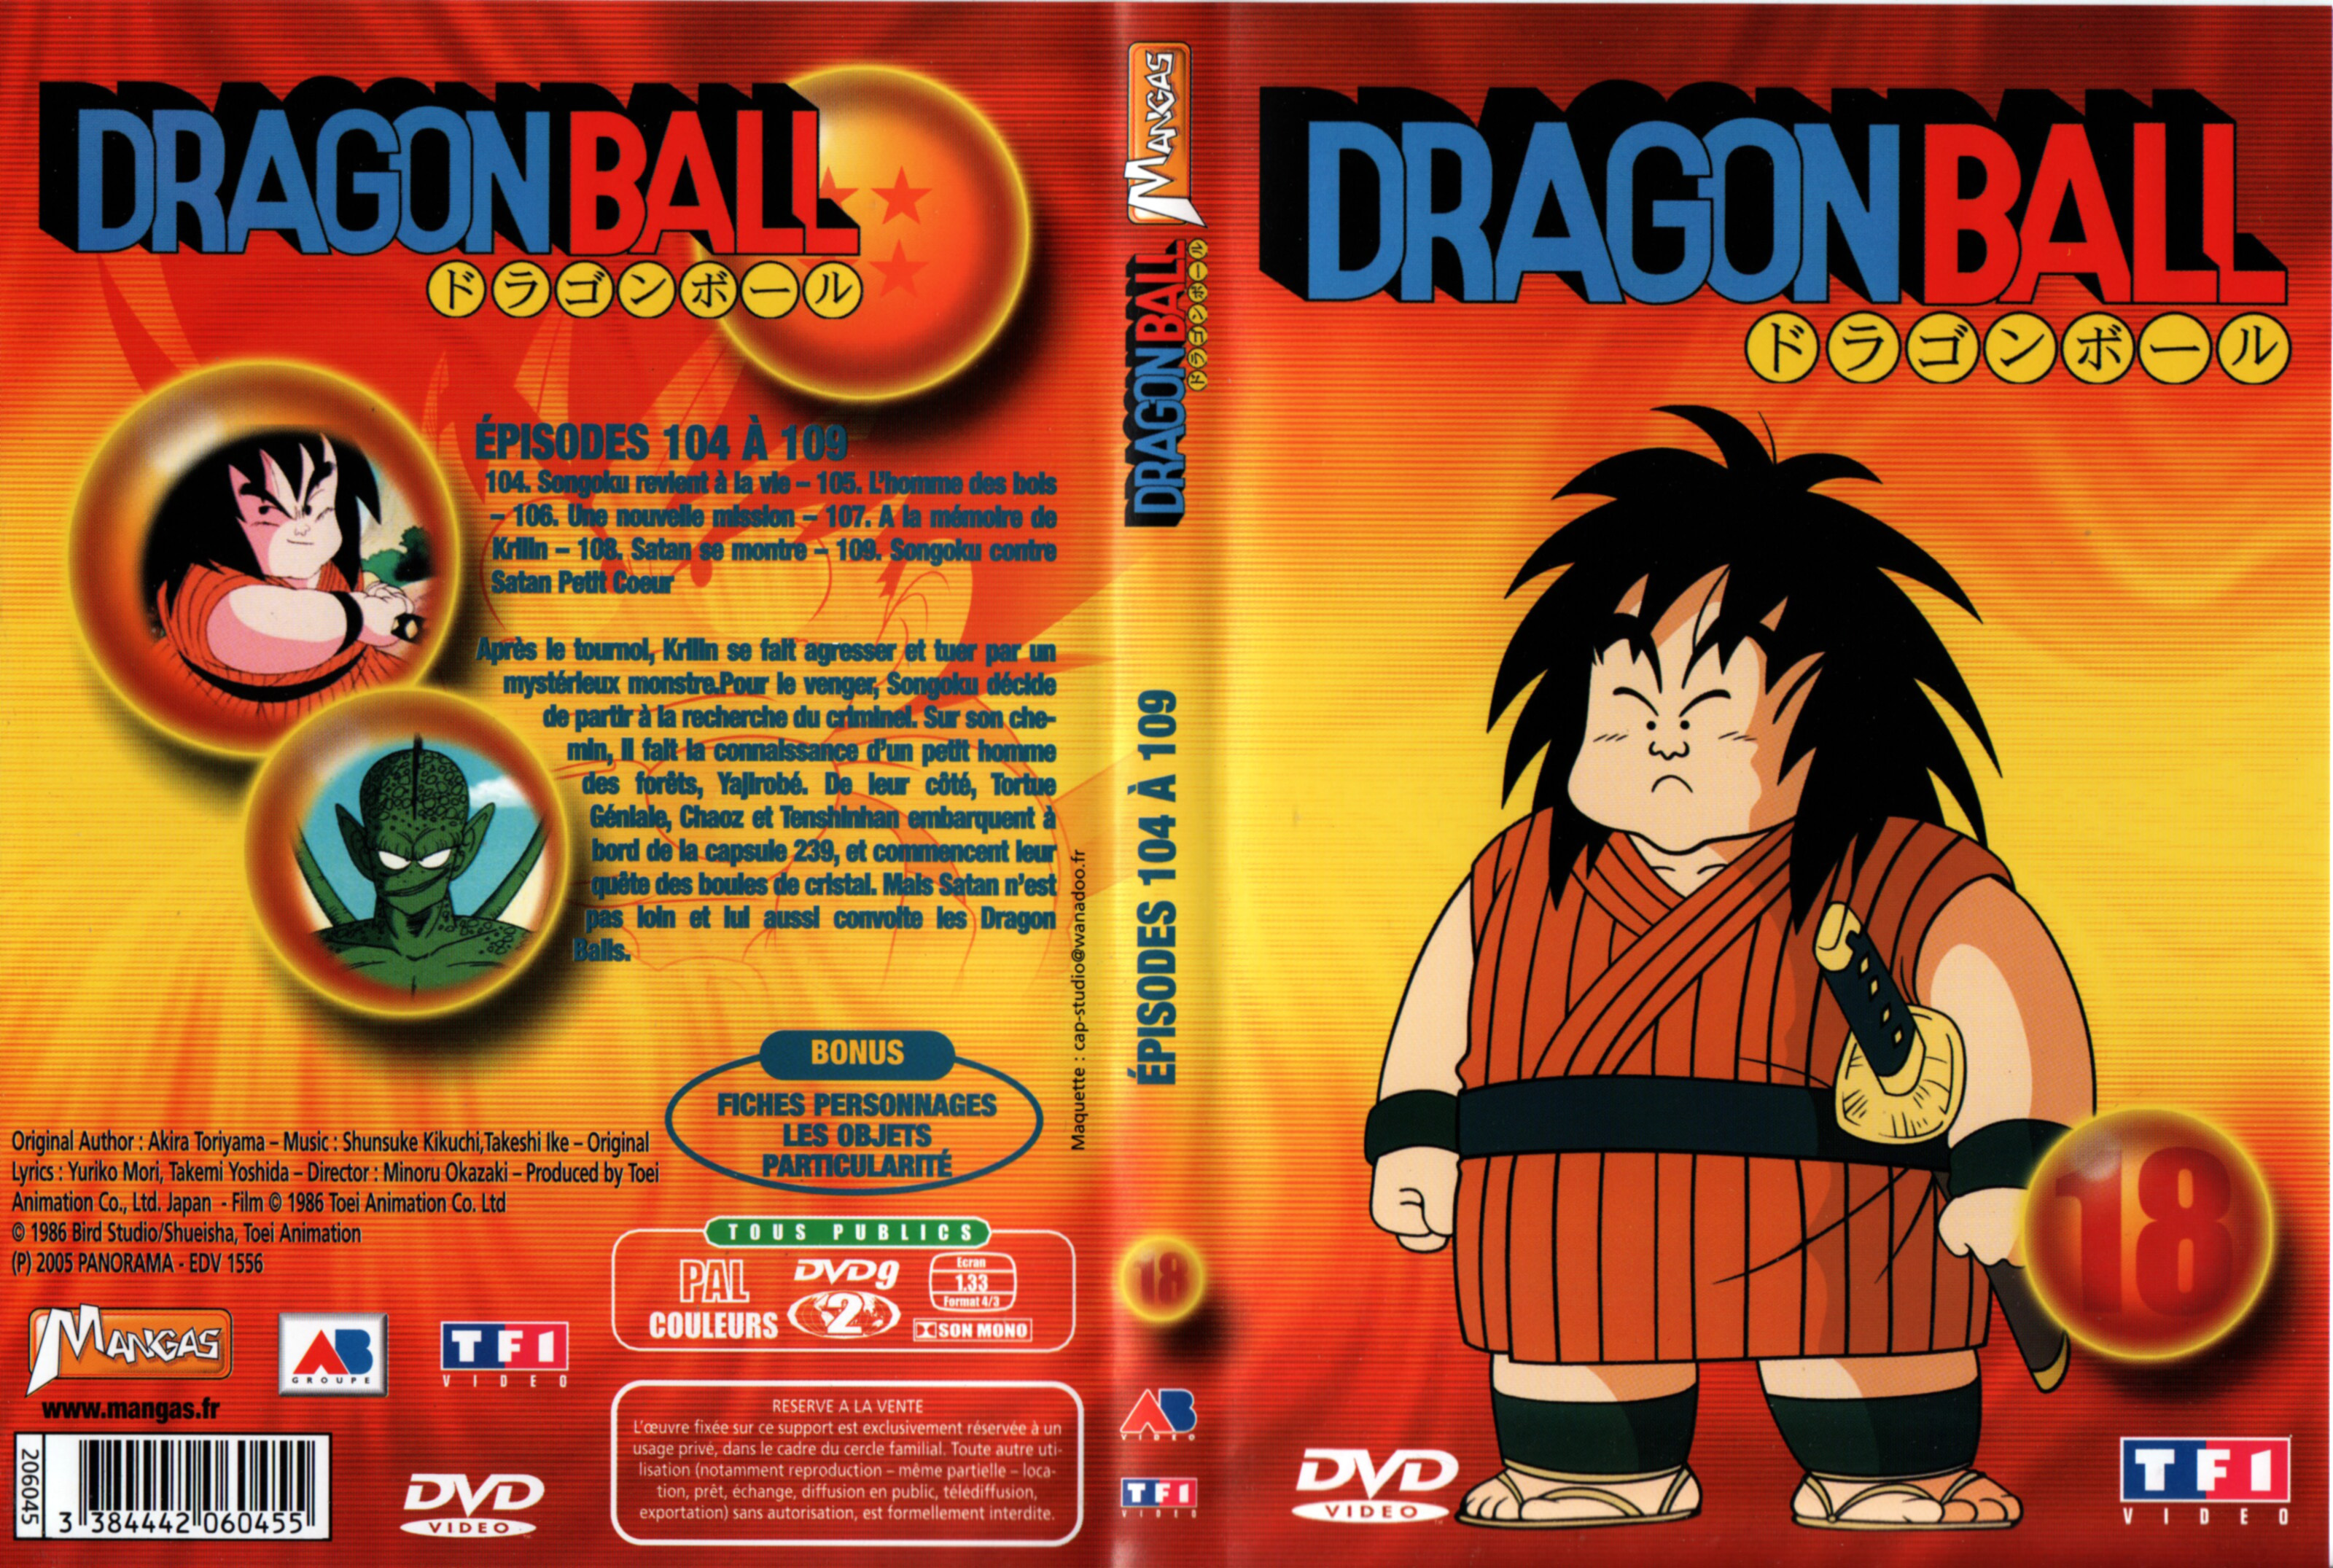 Jaquette DVD Dragon ball vol 18 v2